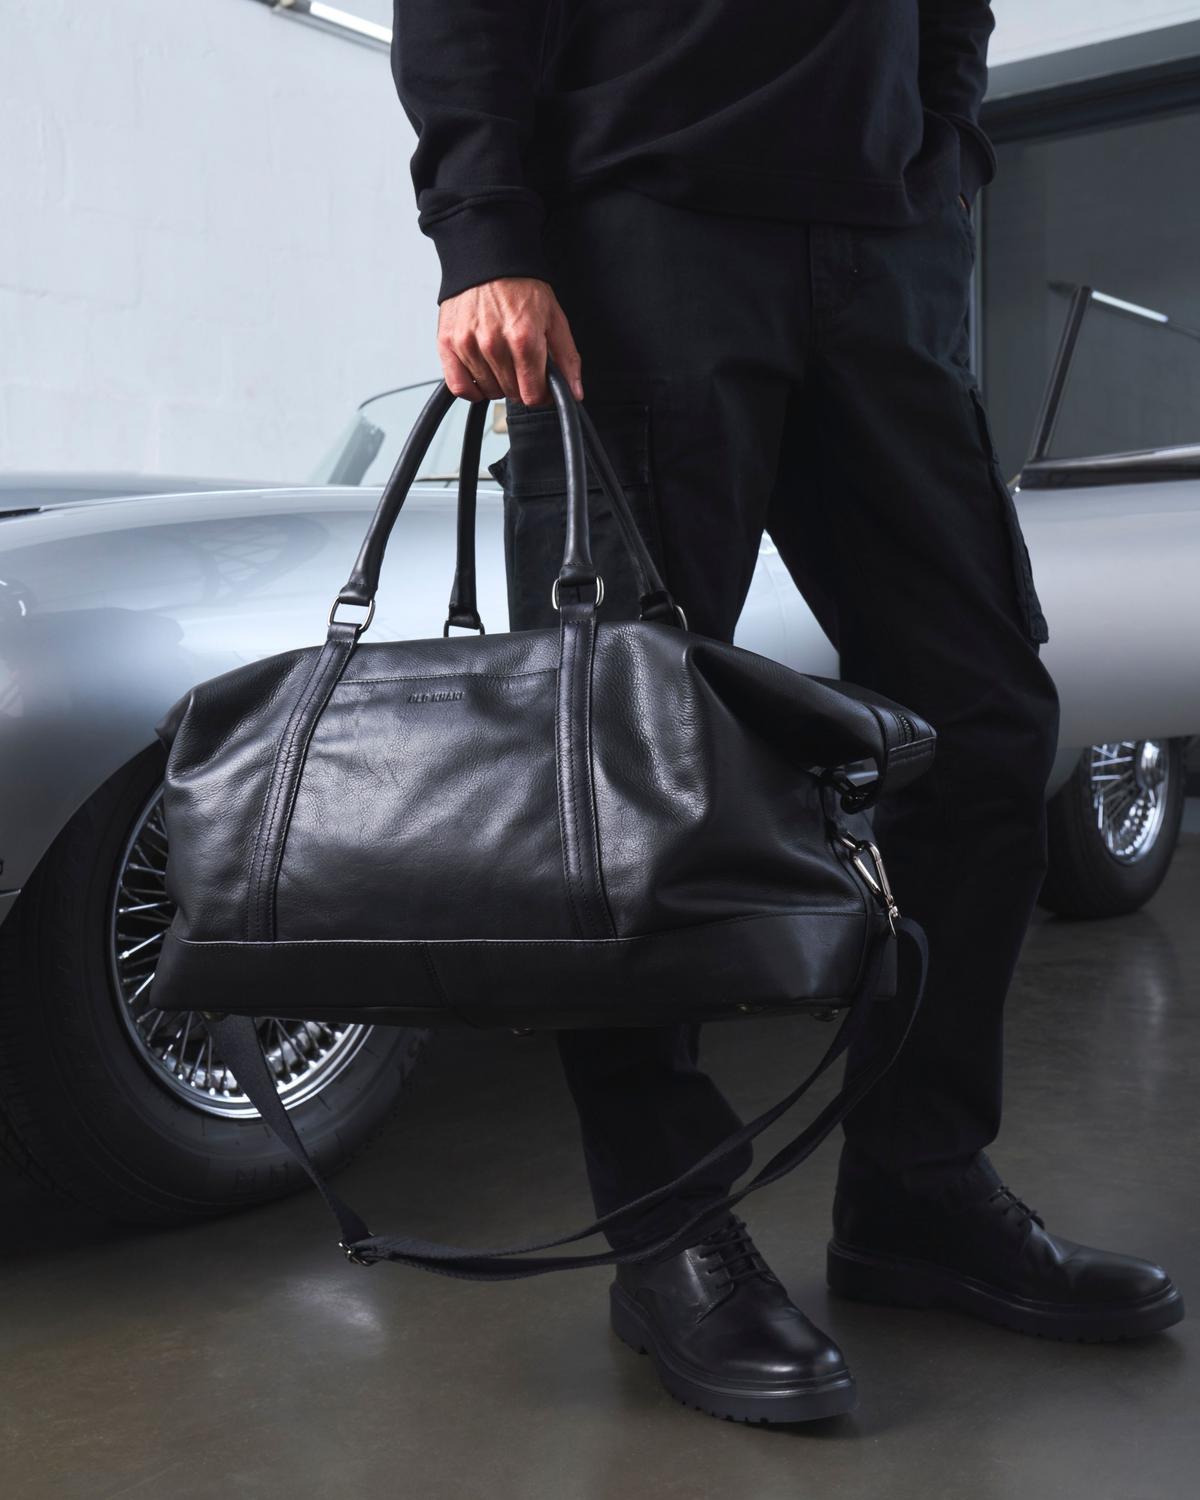 Unisex Rami Leather Weekender Bag | Old Khaki